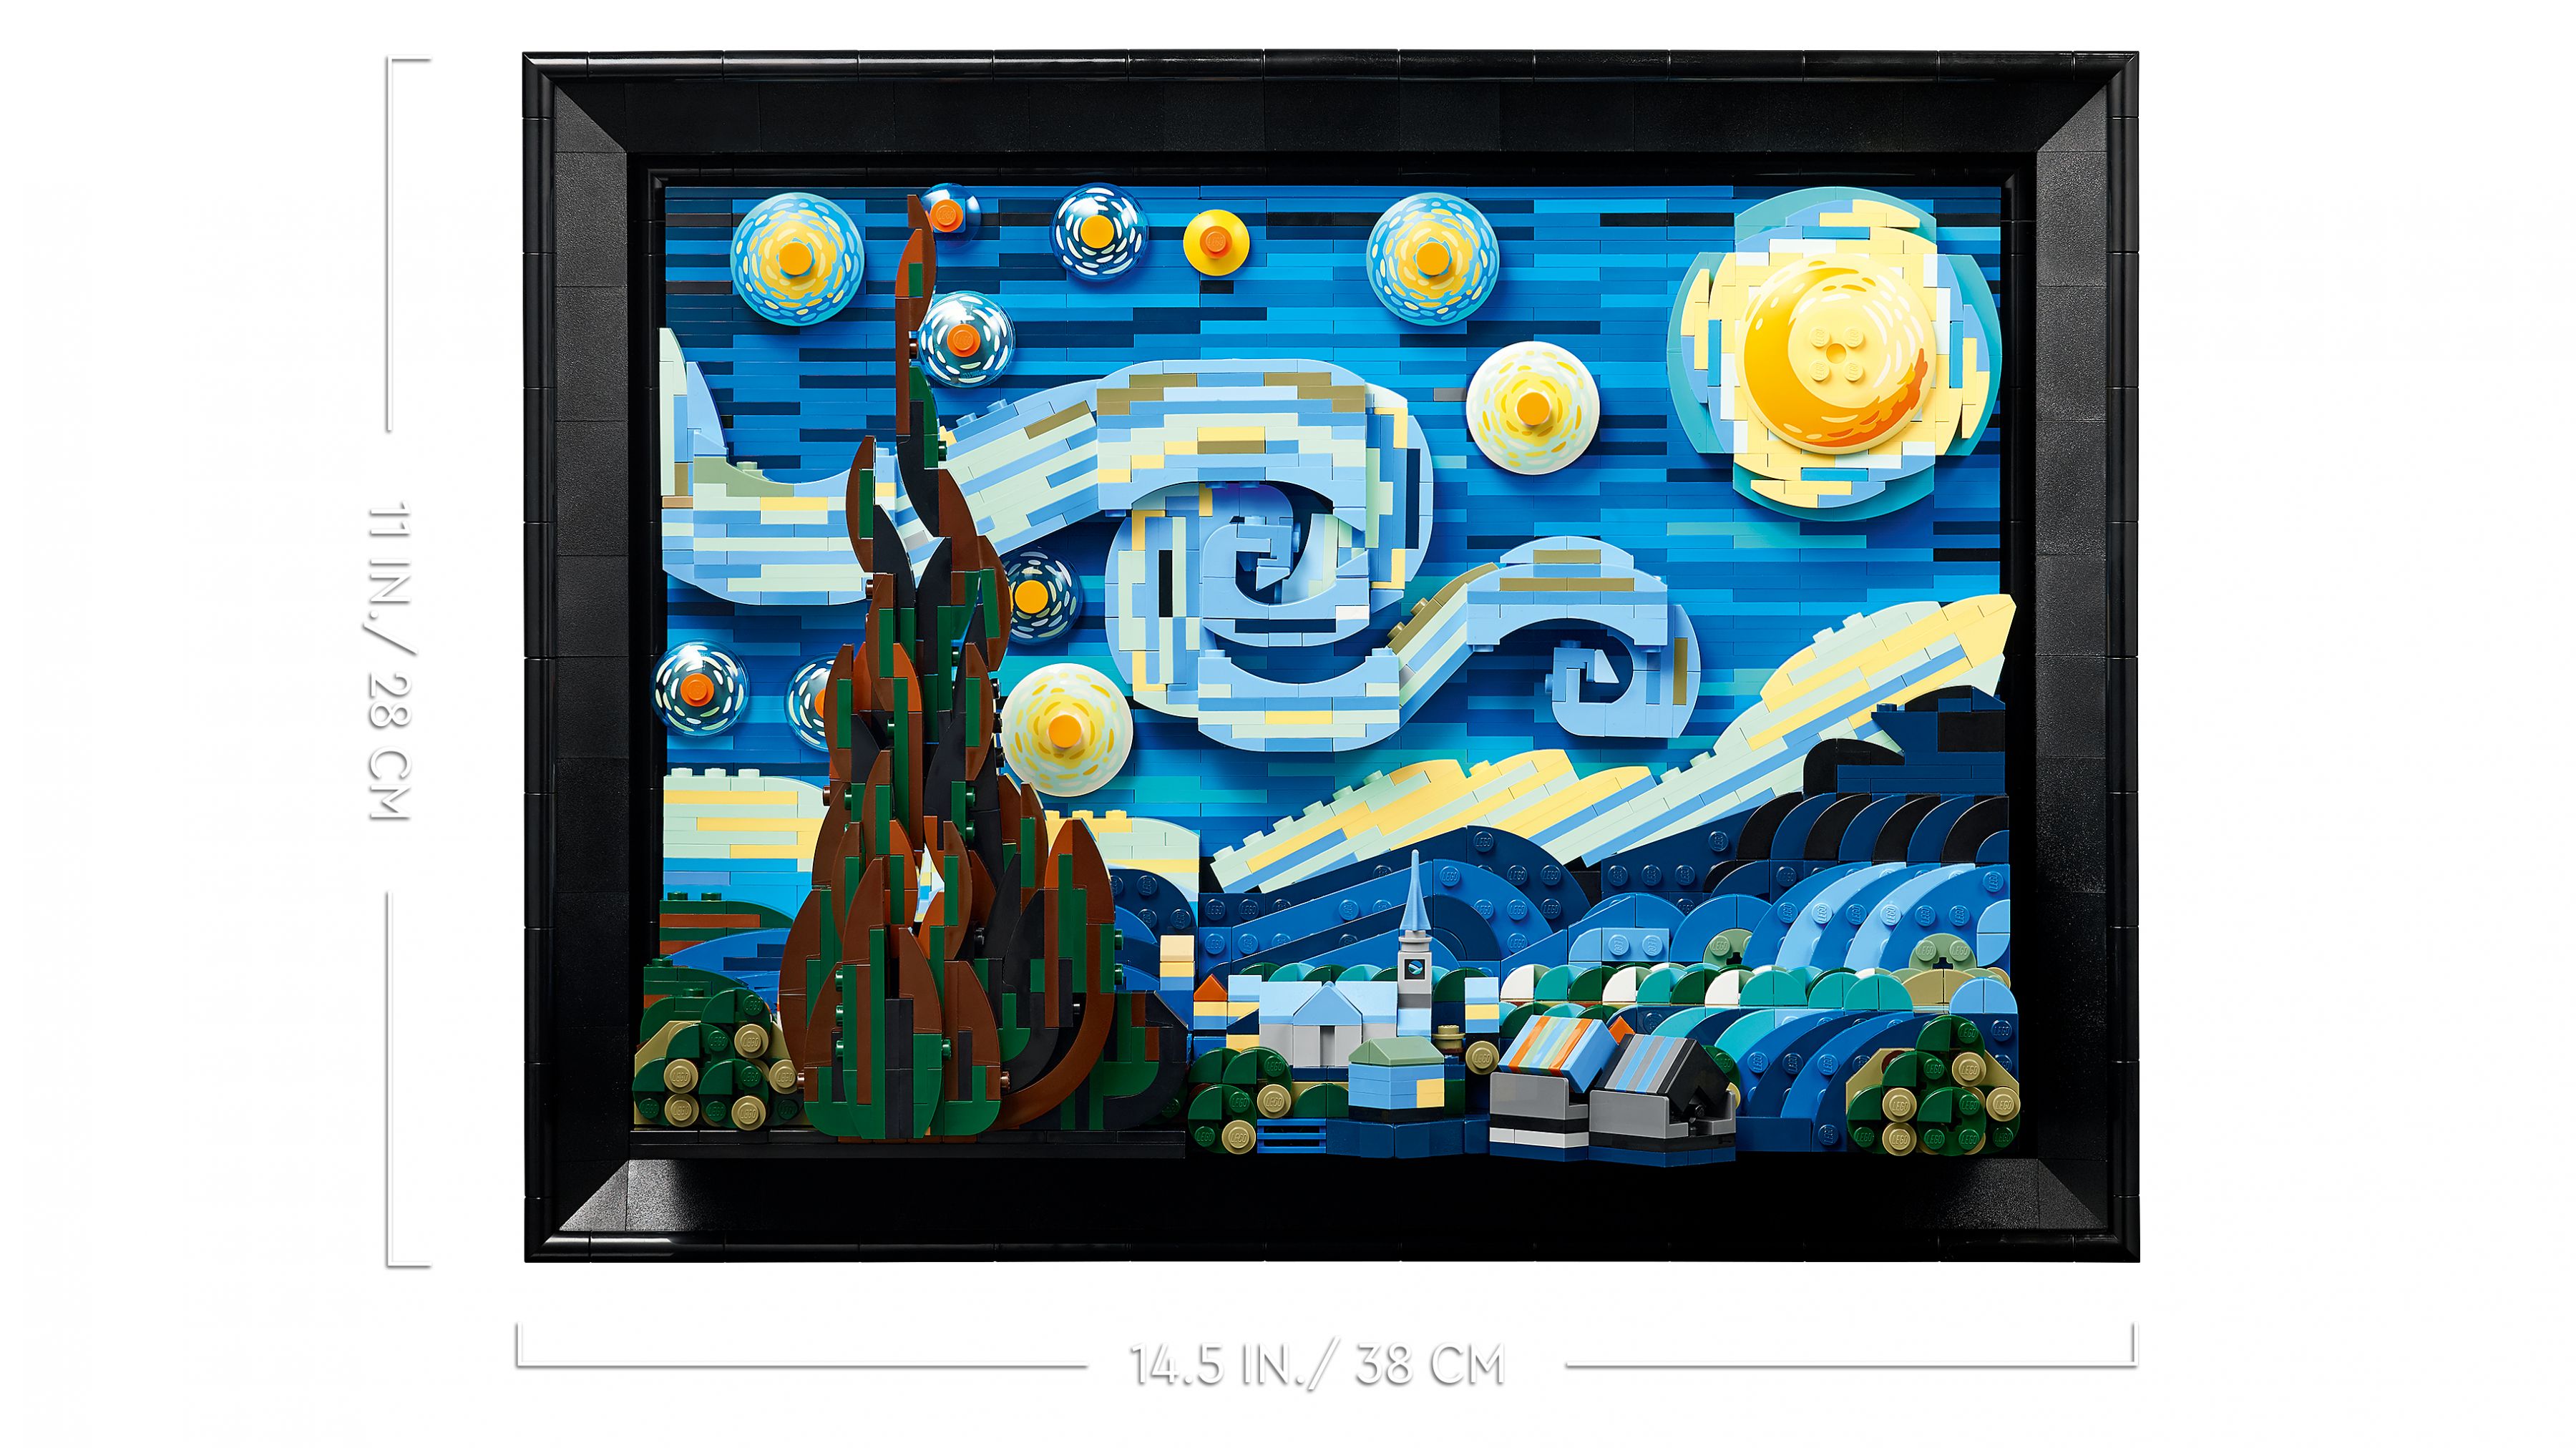 LEGO Ideas 21333 Vincent van Gogh – Sternennacht LEGO_21333_WEB_SEC04_NOBG.jpg